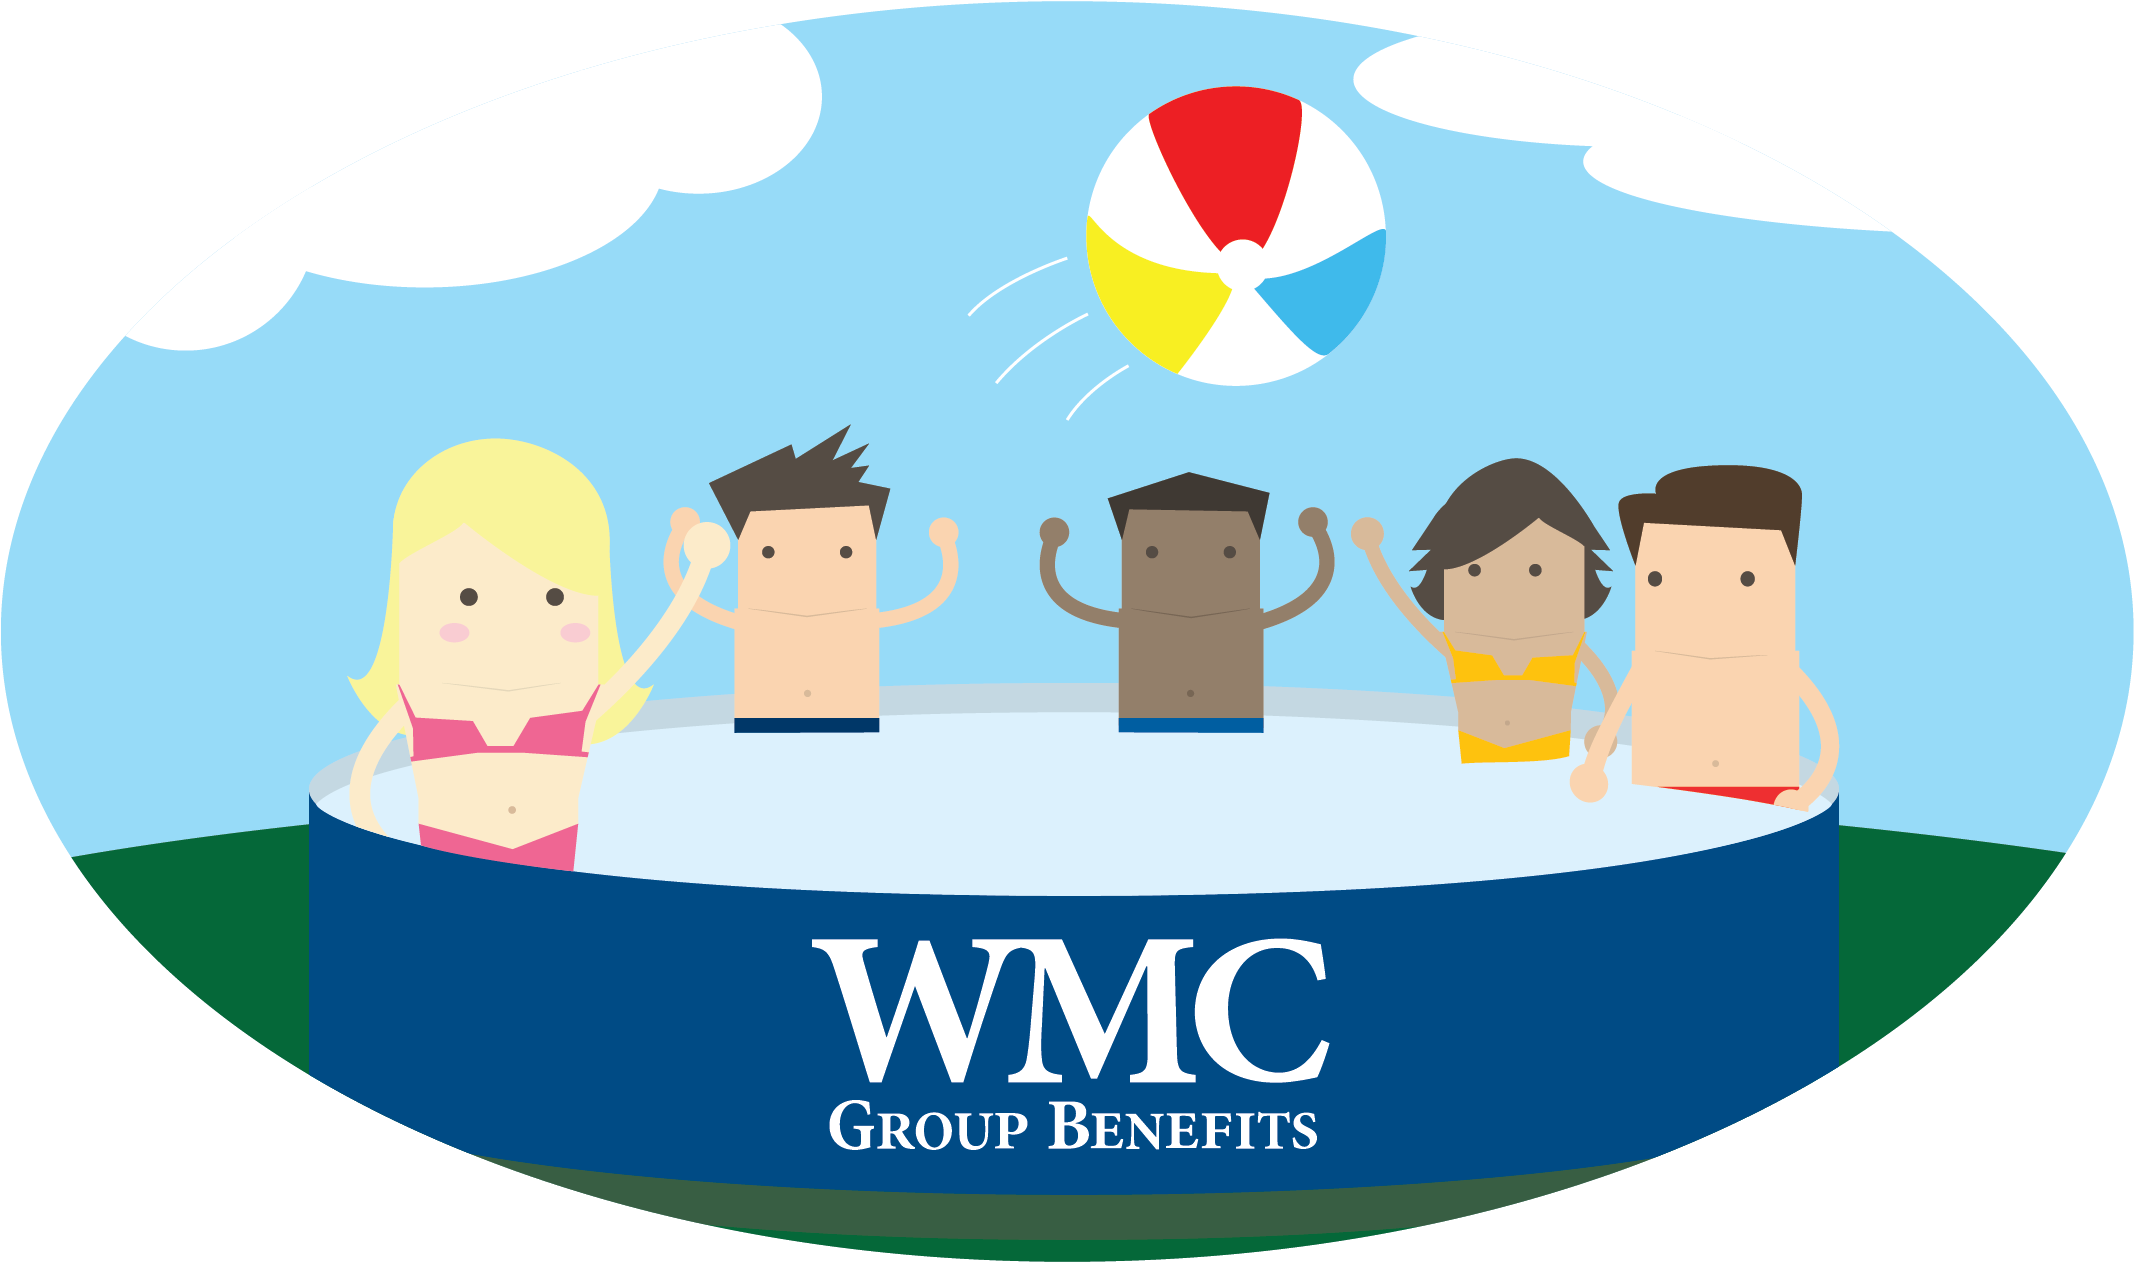 Wmc Group Benefits Pool Graphic - Employee Benefits (2138x1293)